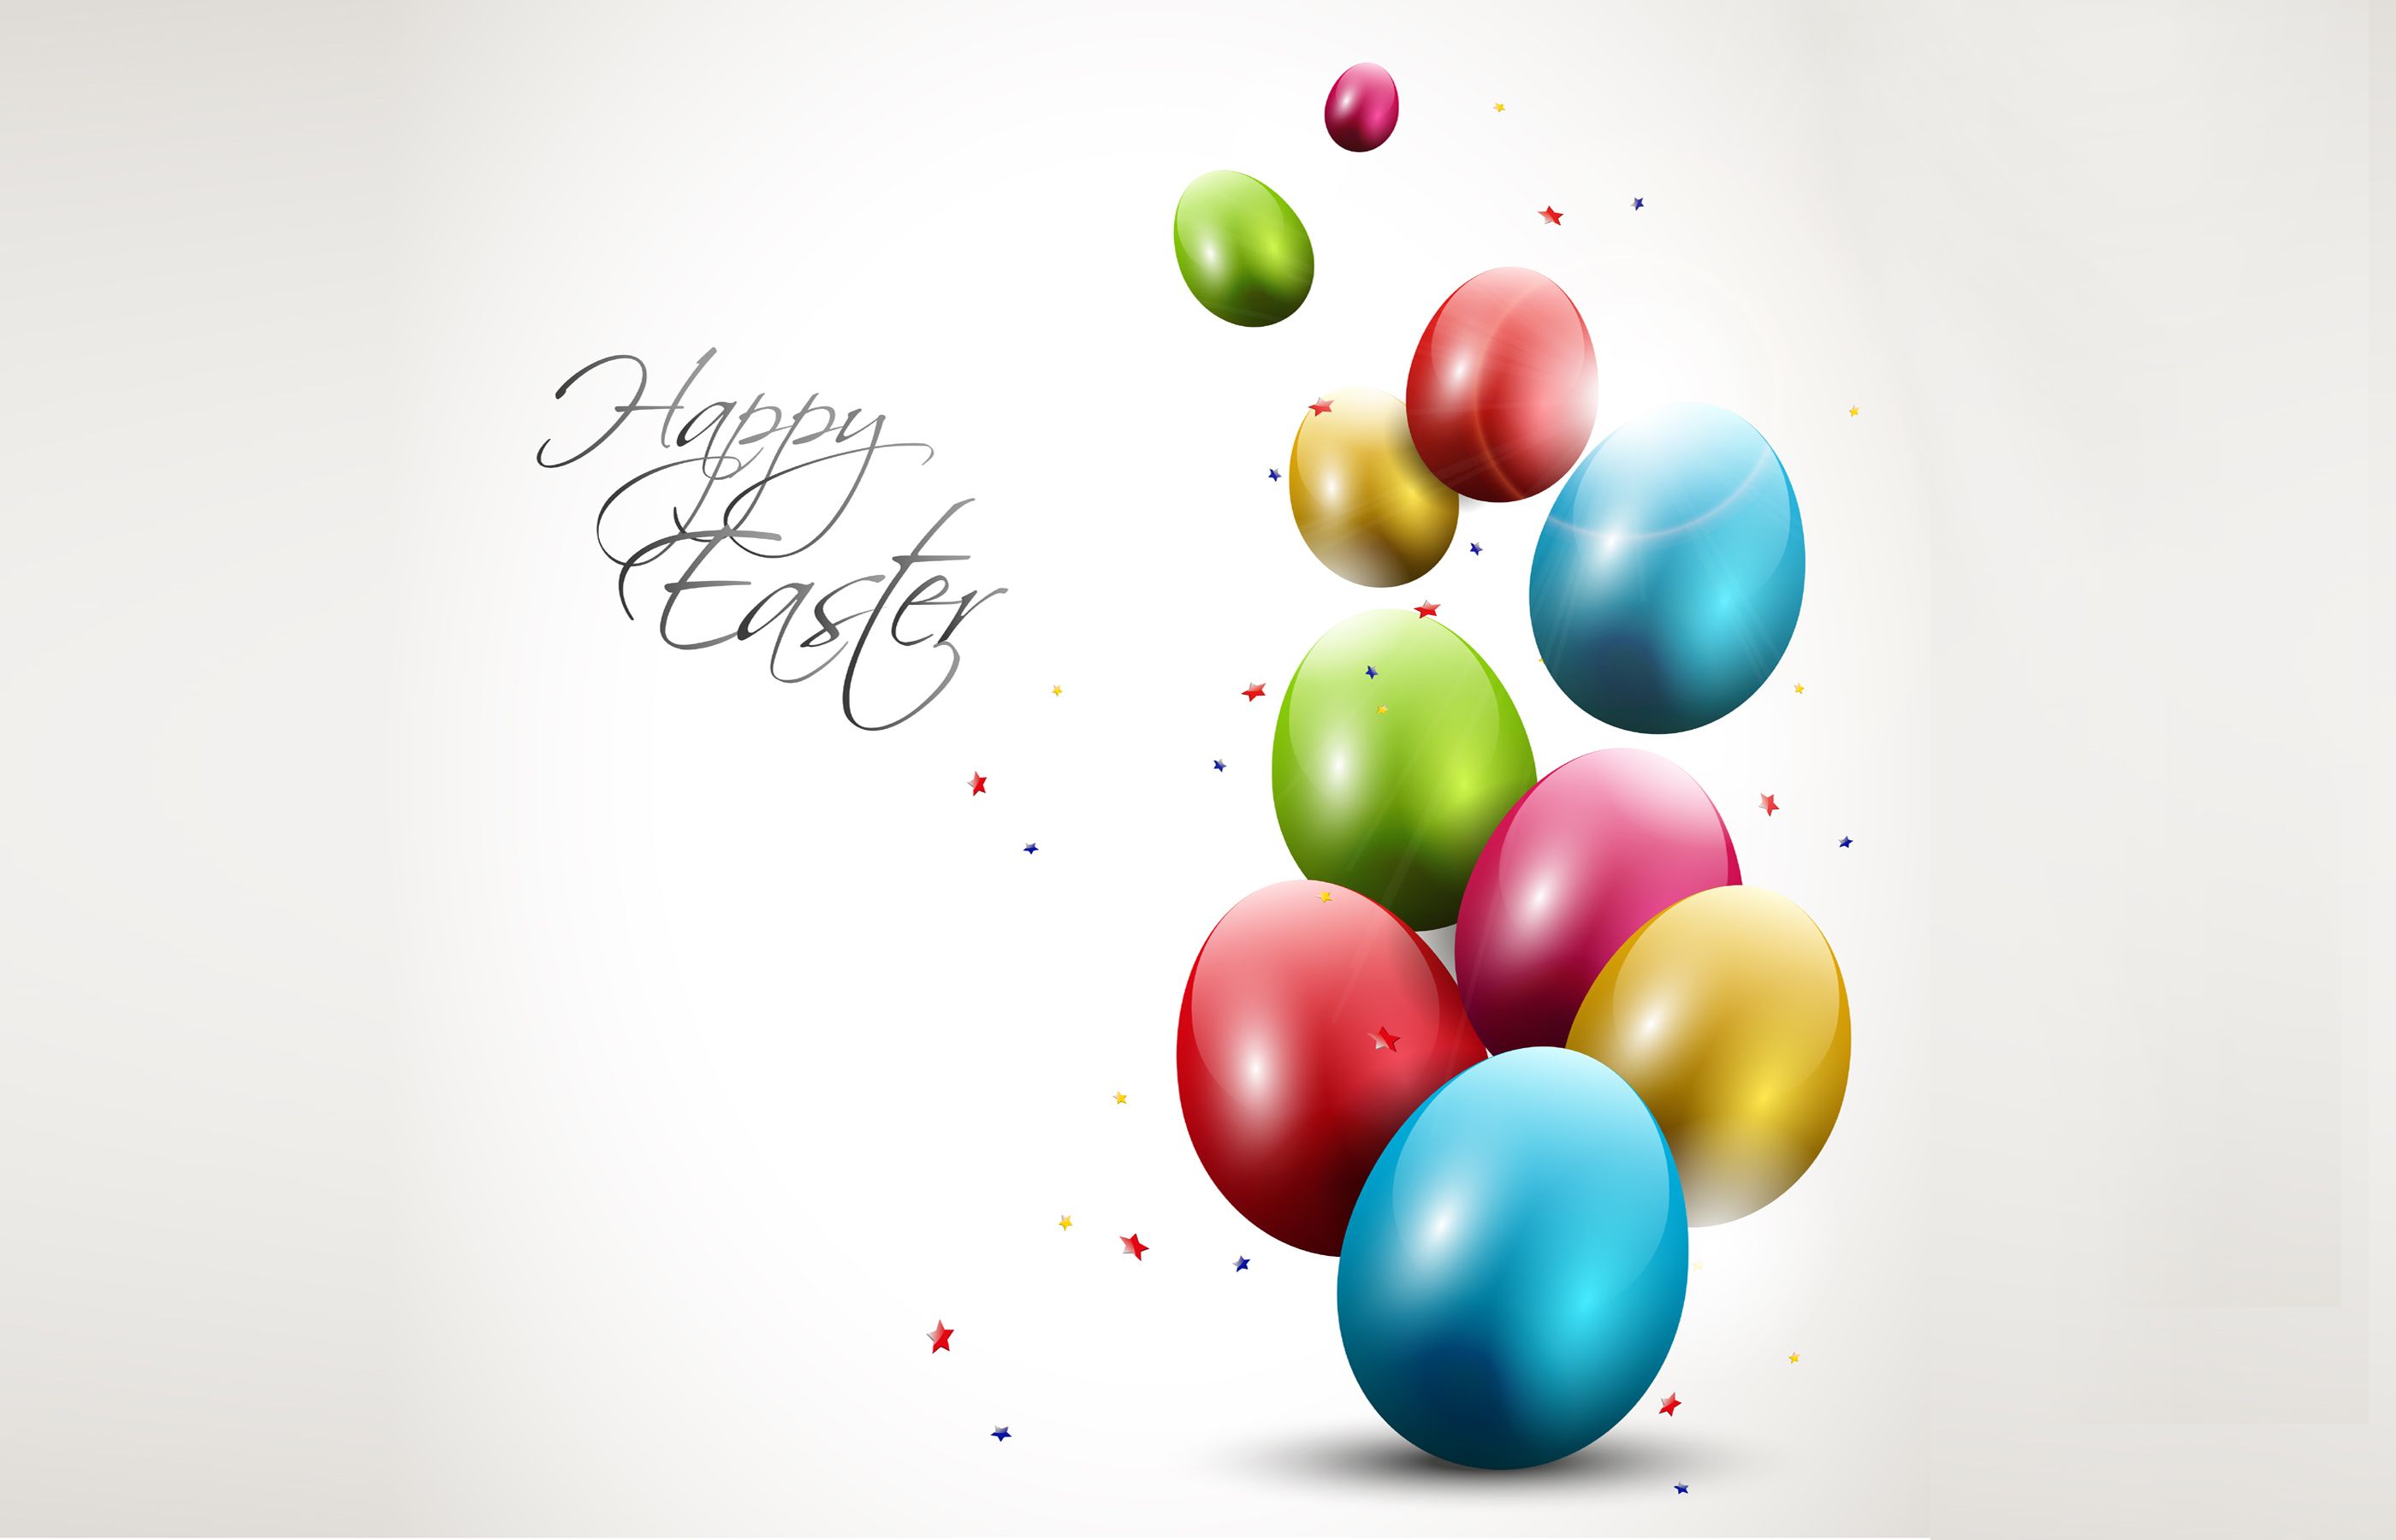 Free download Happy Easter Image for Desktop Wallpaper